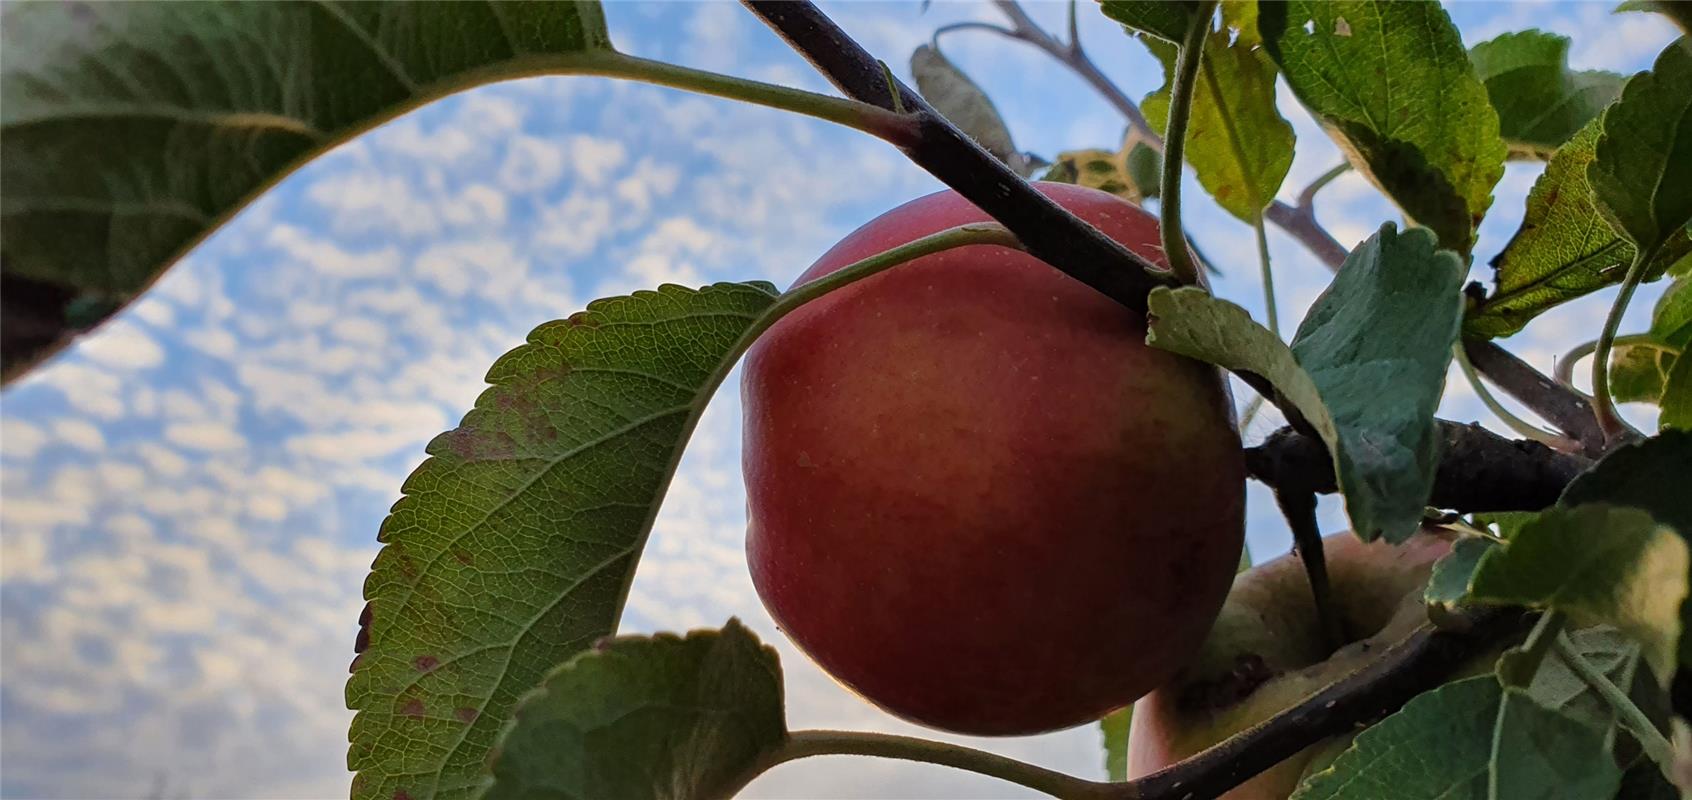 "Apfel genießt die Abendsonne" hat die Herrenbergerin Gabi Brenner ihr Foto beti...